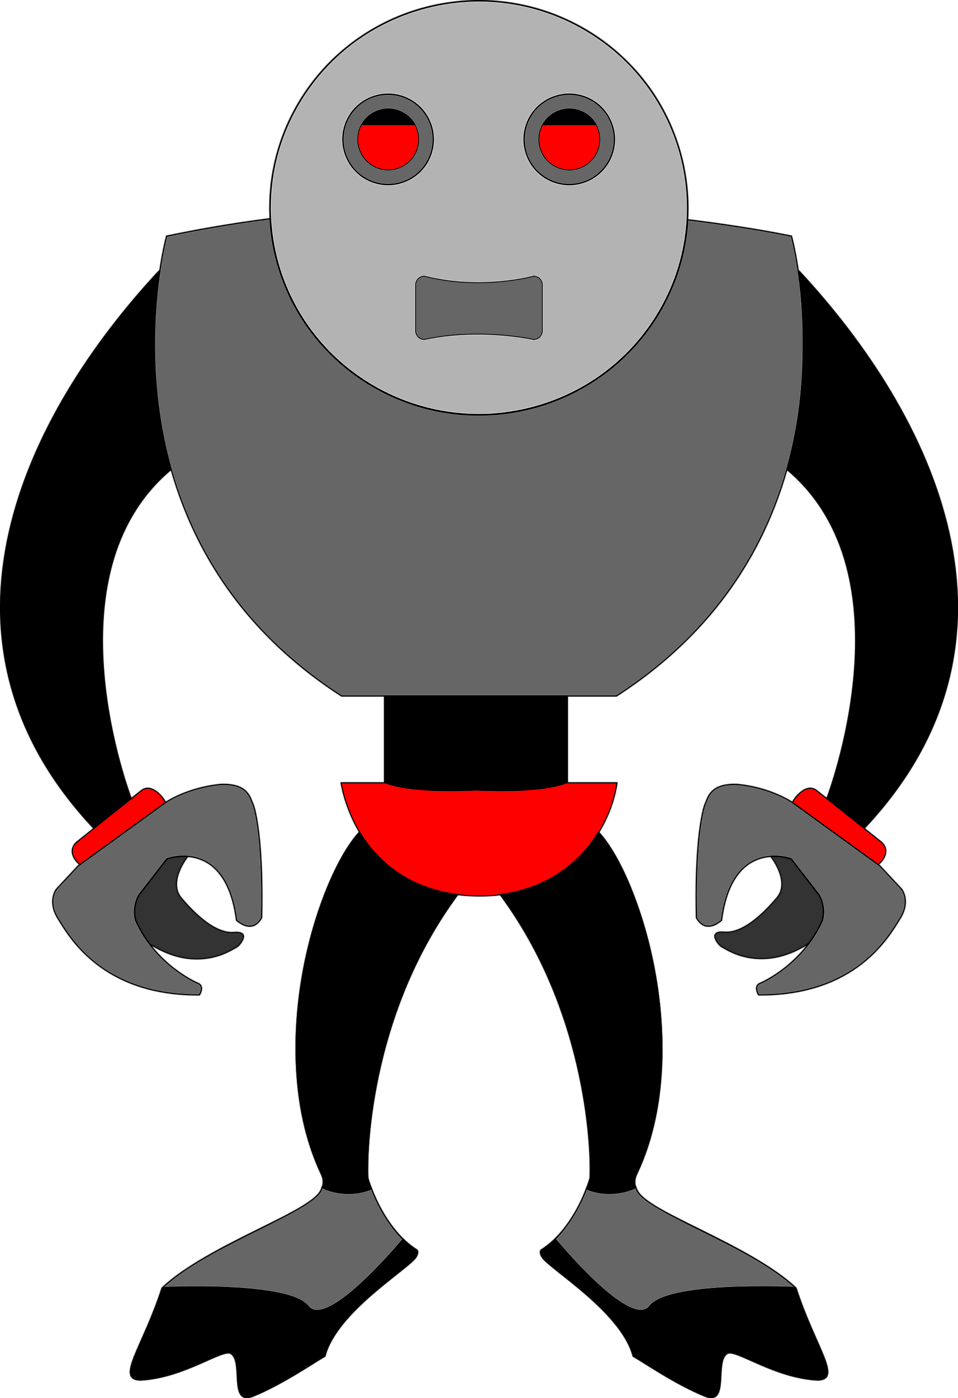 Robot | Free Stock Photo | Illustration of a grey cartoon robot ...